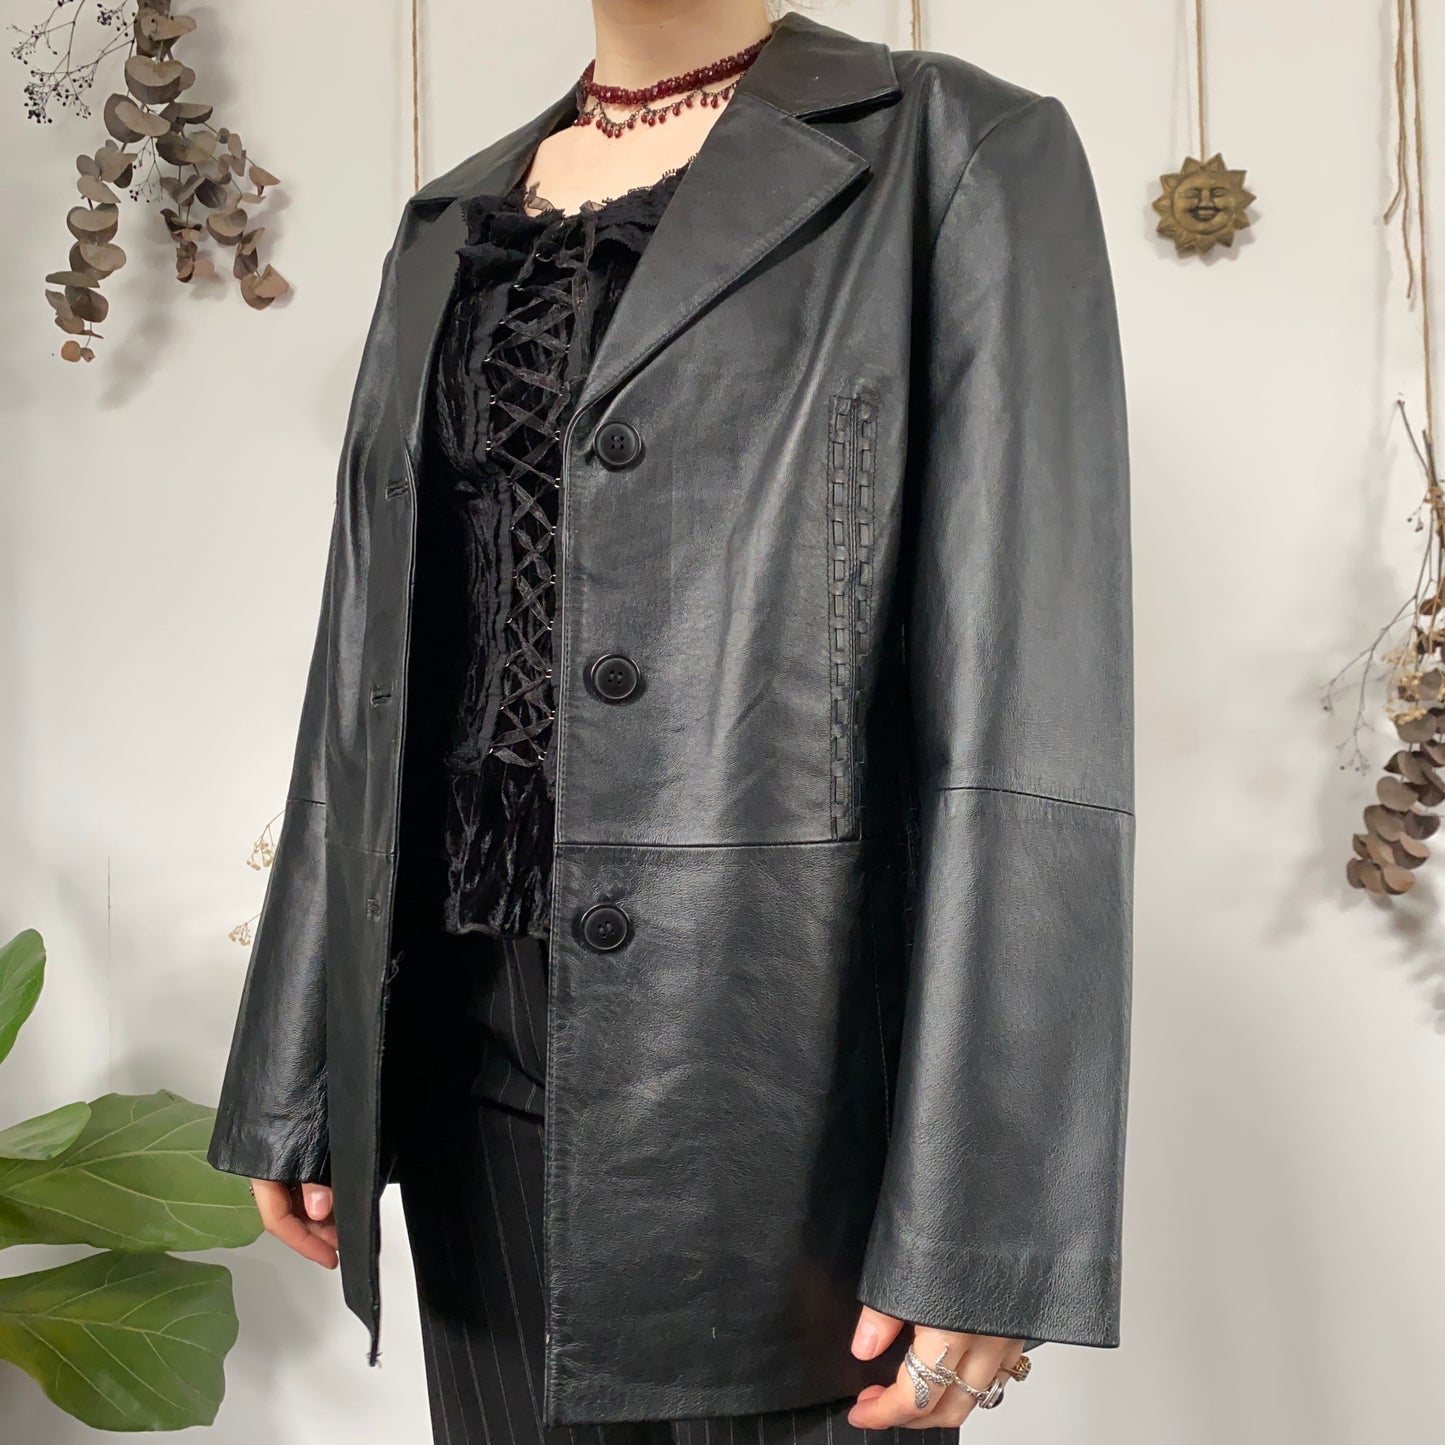 Black leather jacket - size L